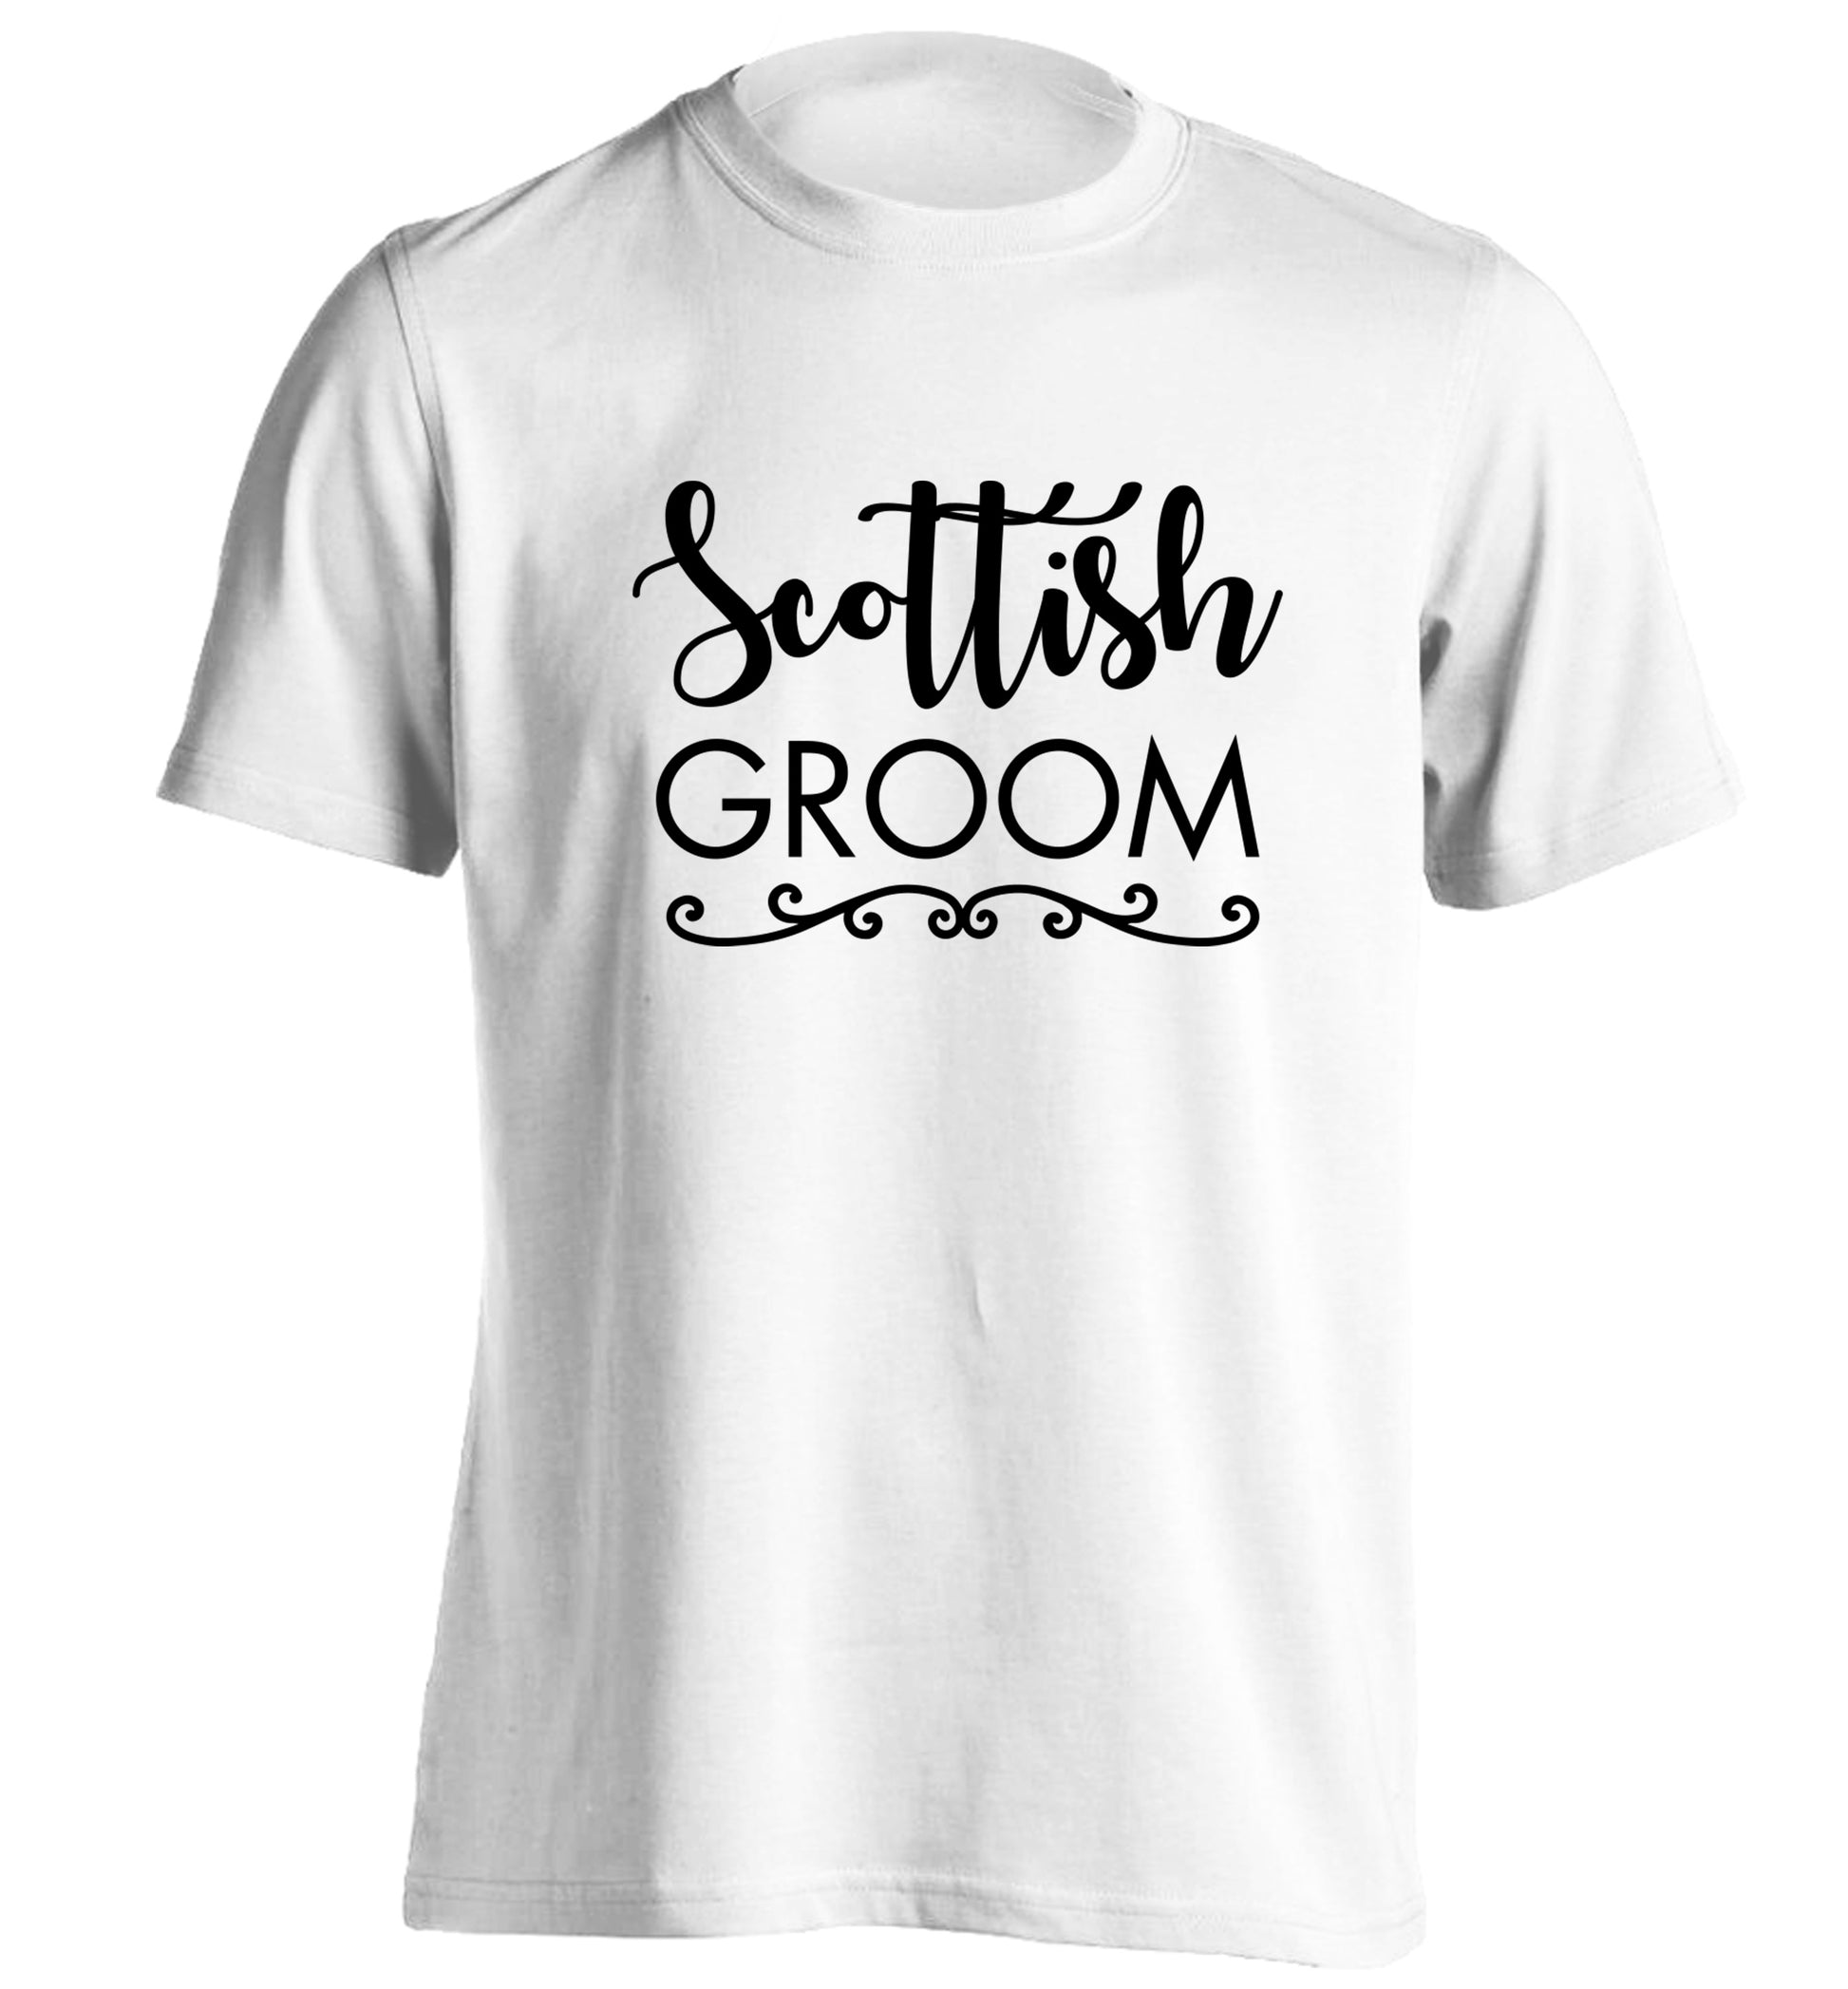 Scottish groom adults unisex white Tshirt 2XL